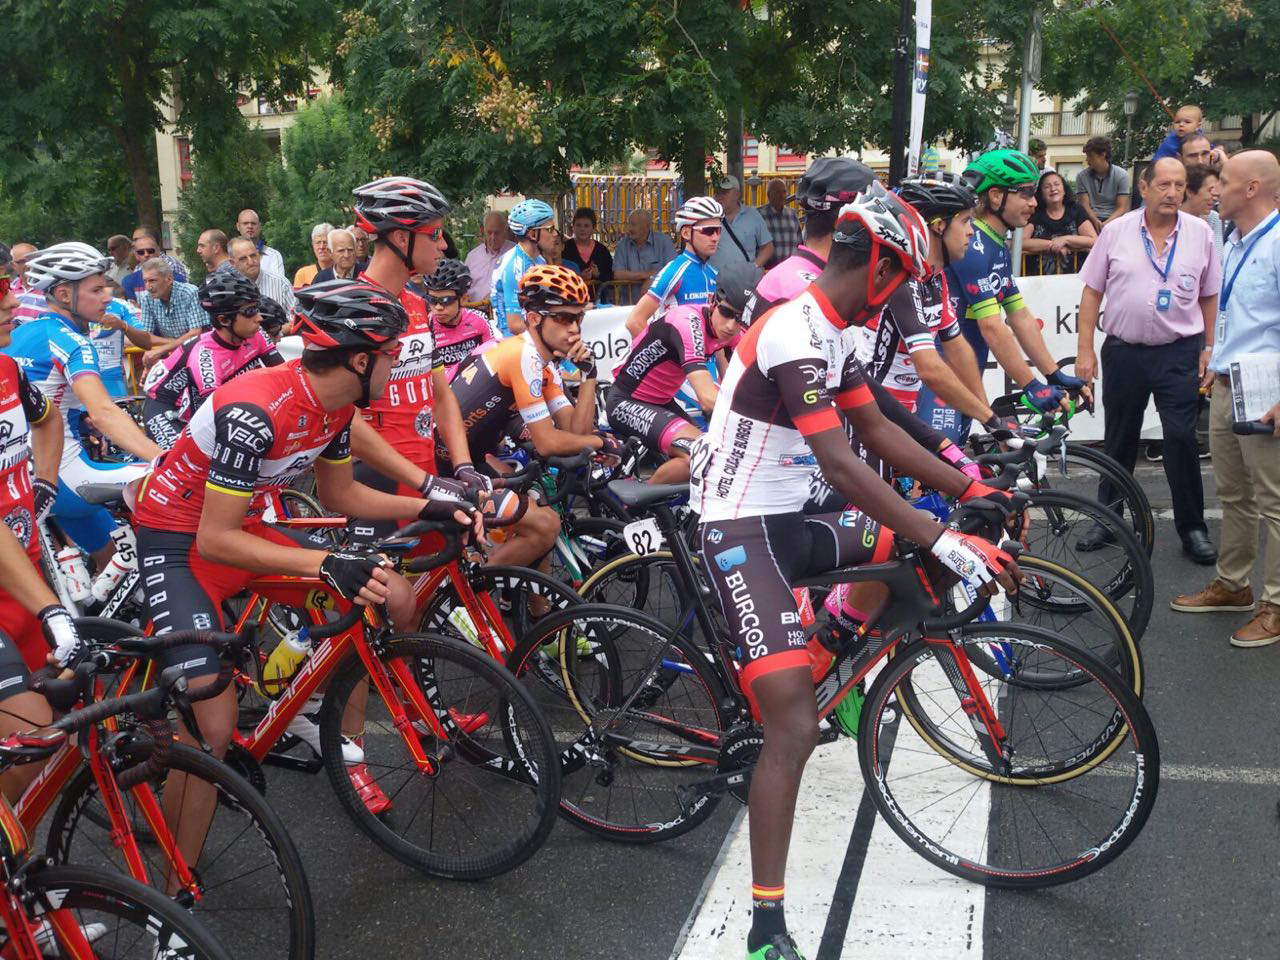 Members of Massi-Kuwait Cycling team at the 93rd Prueba Villafranca-Ordiziako Klasika race held in Spain